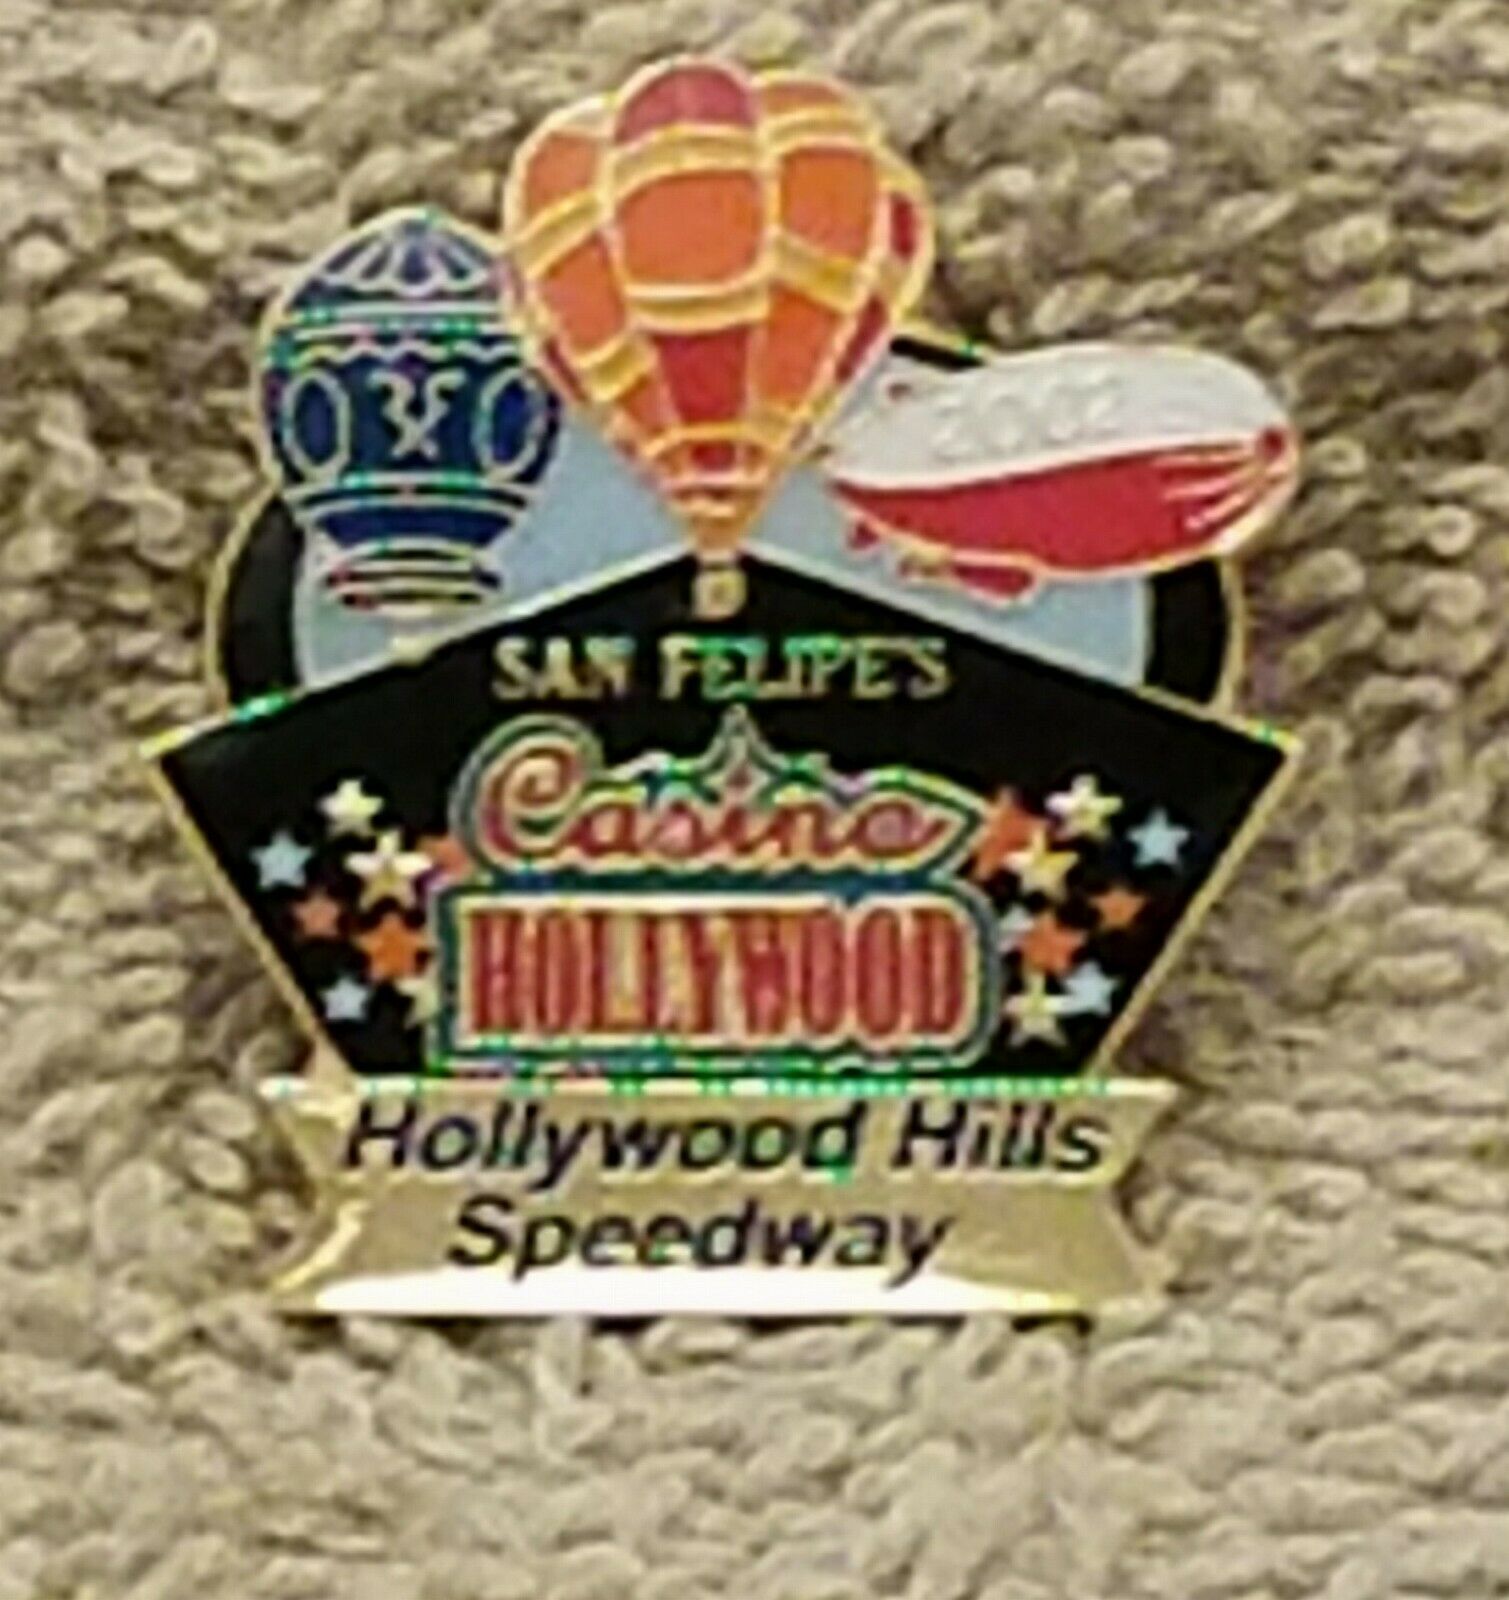 2002 San Felipe's Casino Hollywood - Hollywood Hills Speedway Balloon Pin